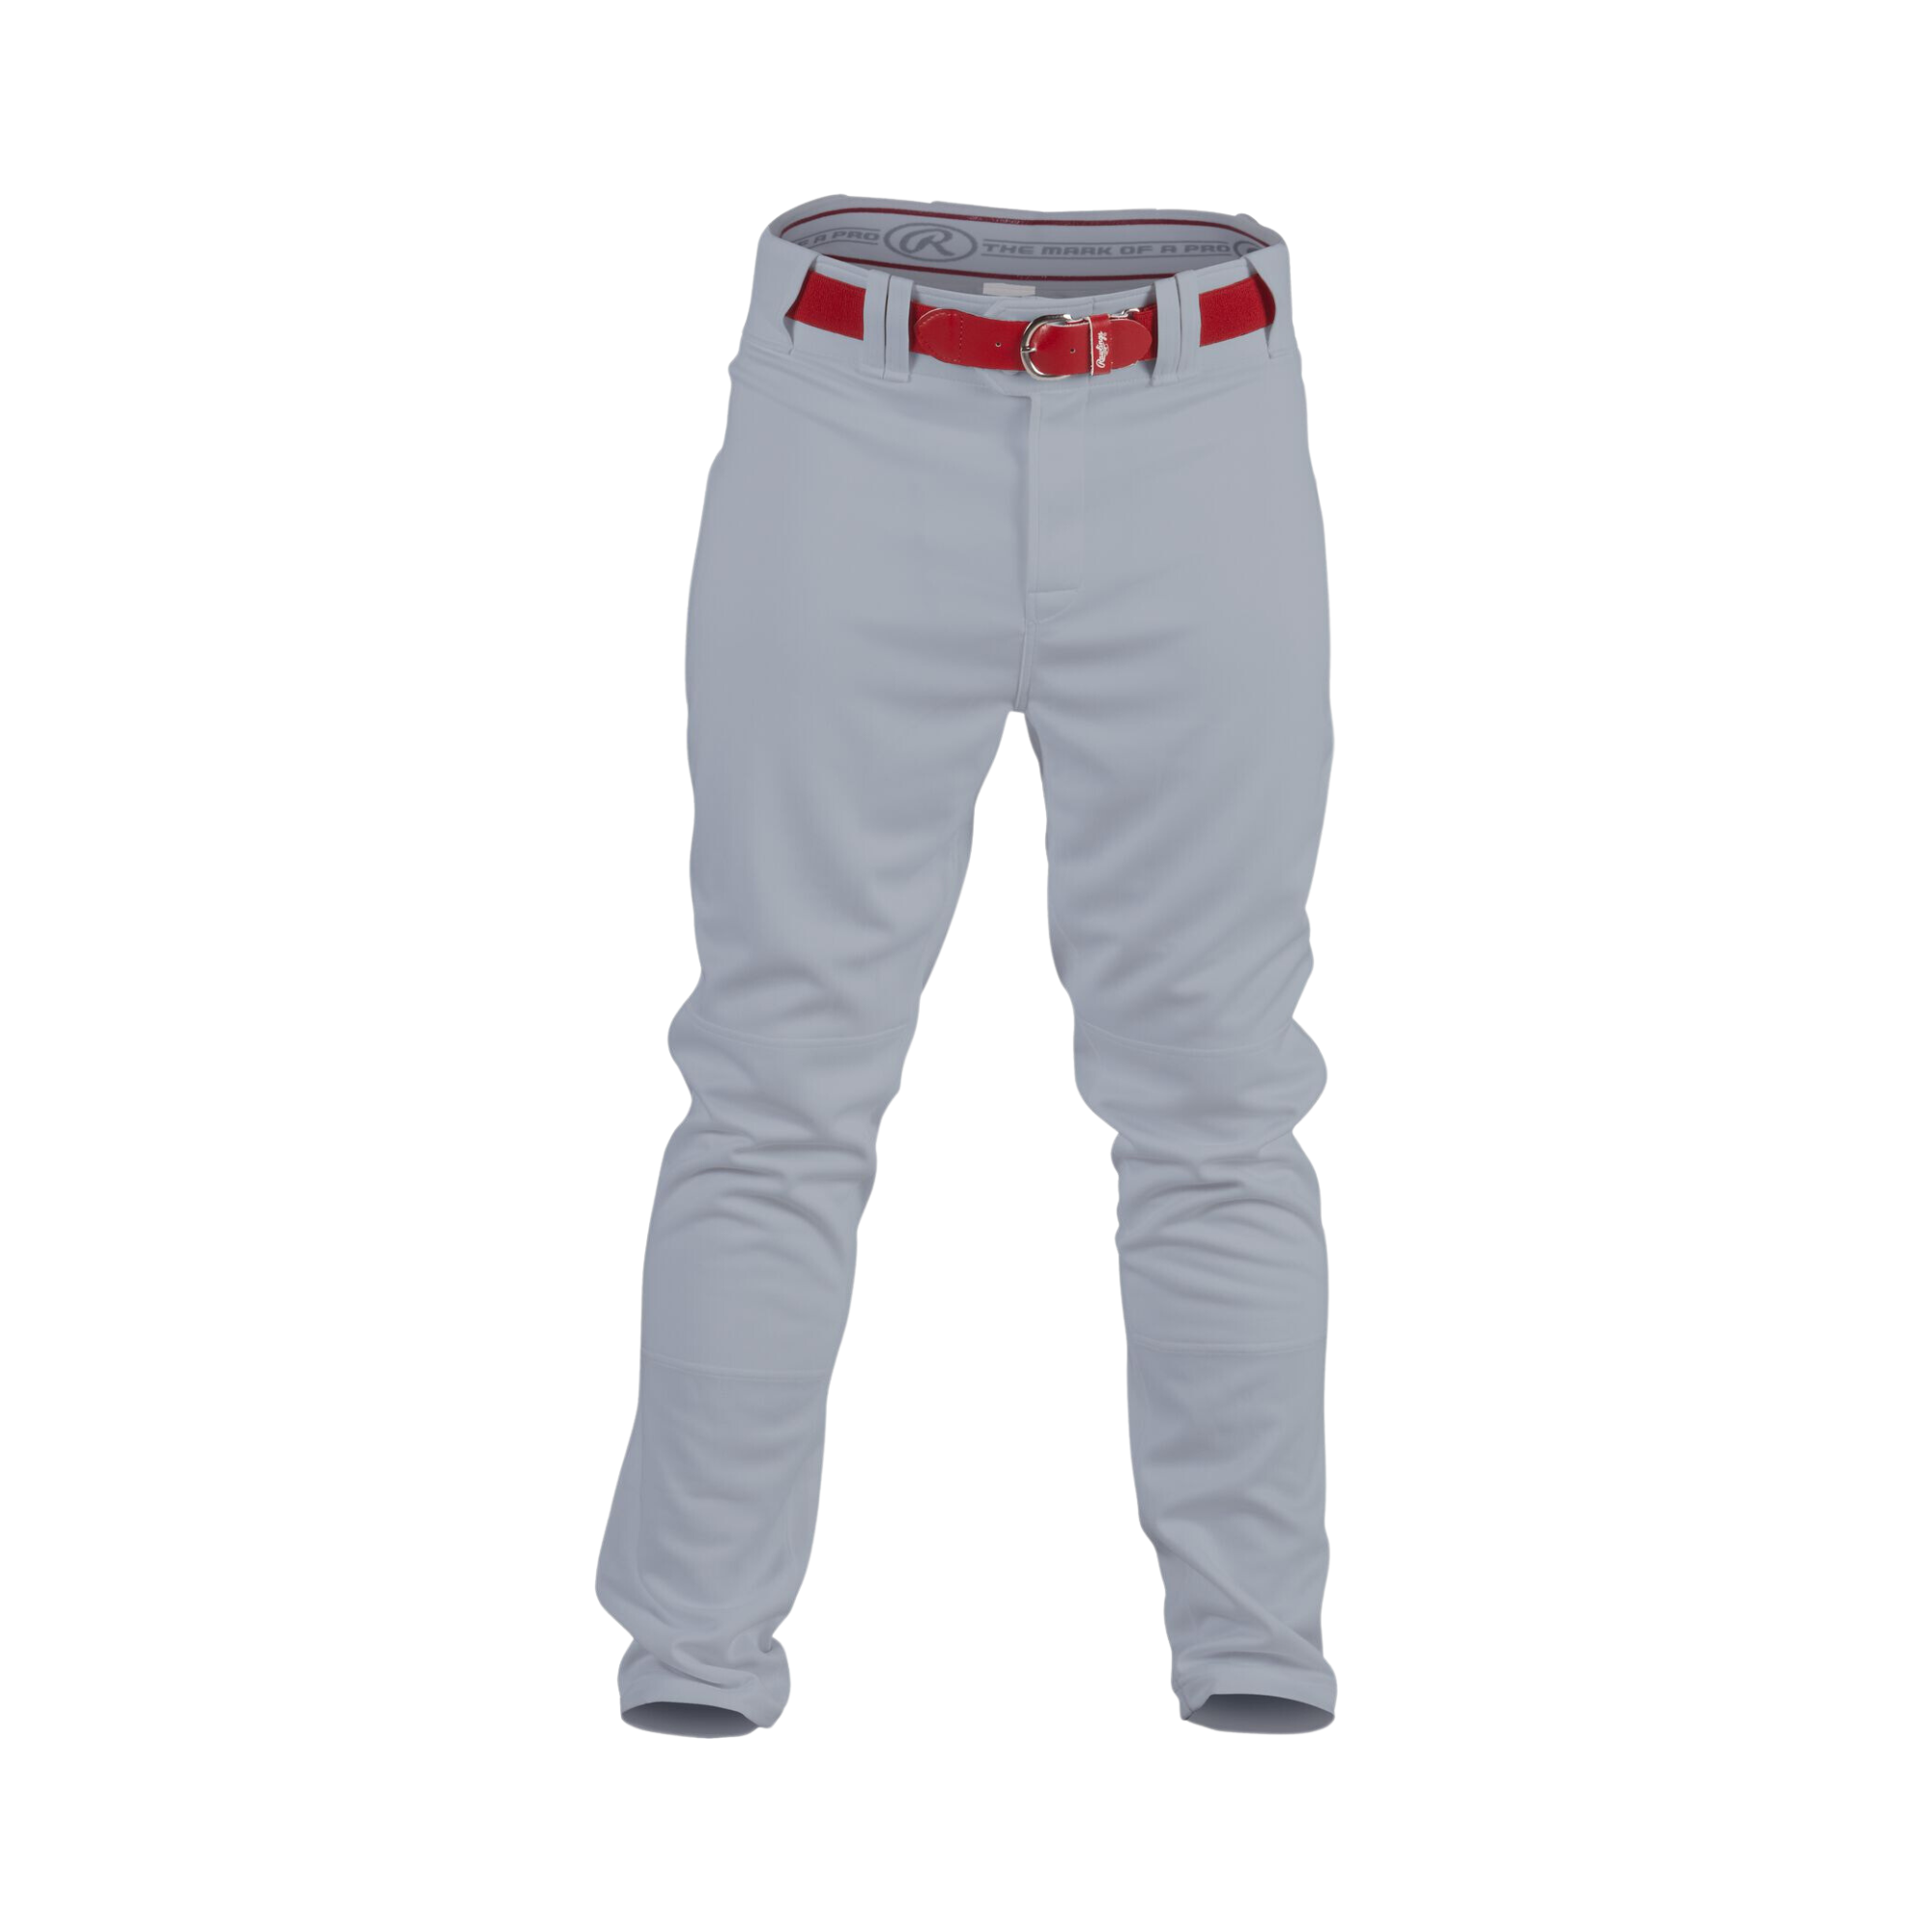 Rawlings Pro 150 Semi-Relaxed Baseball Pants Blue Gray